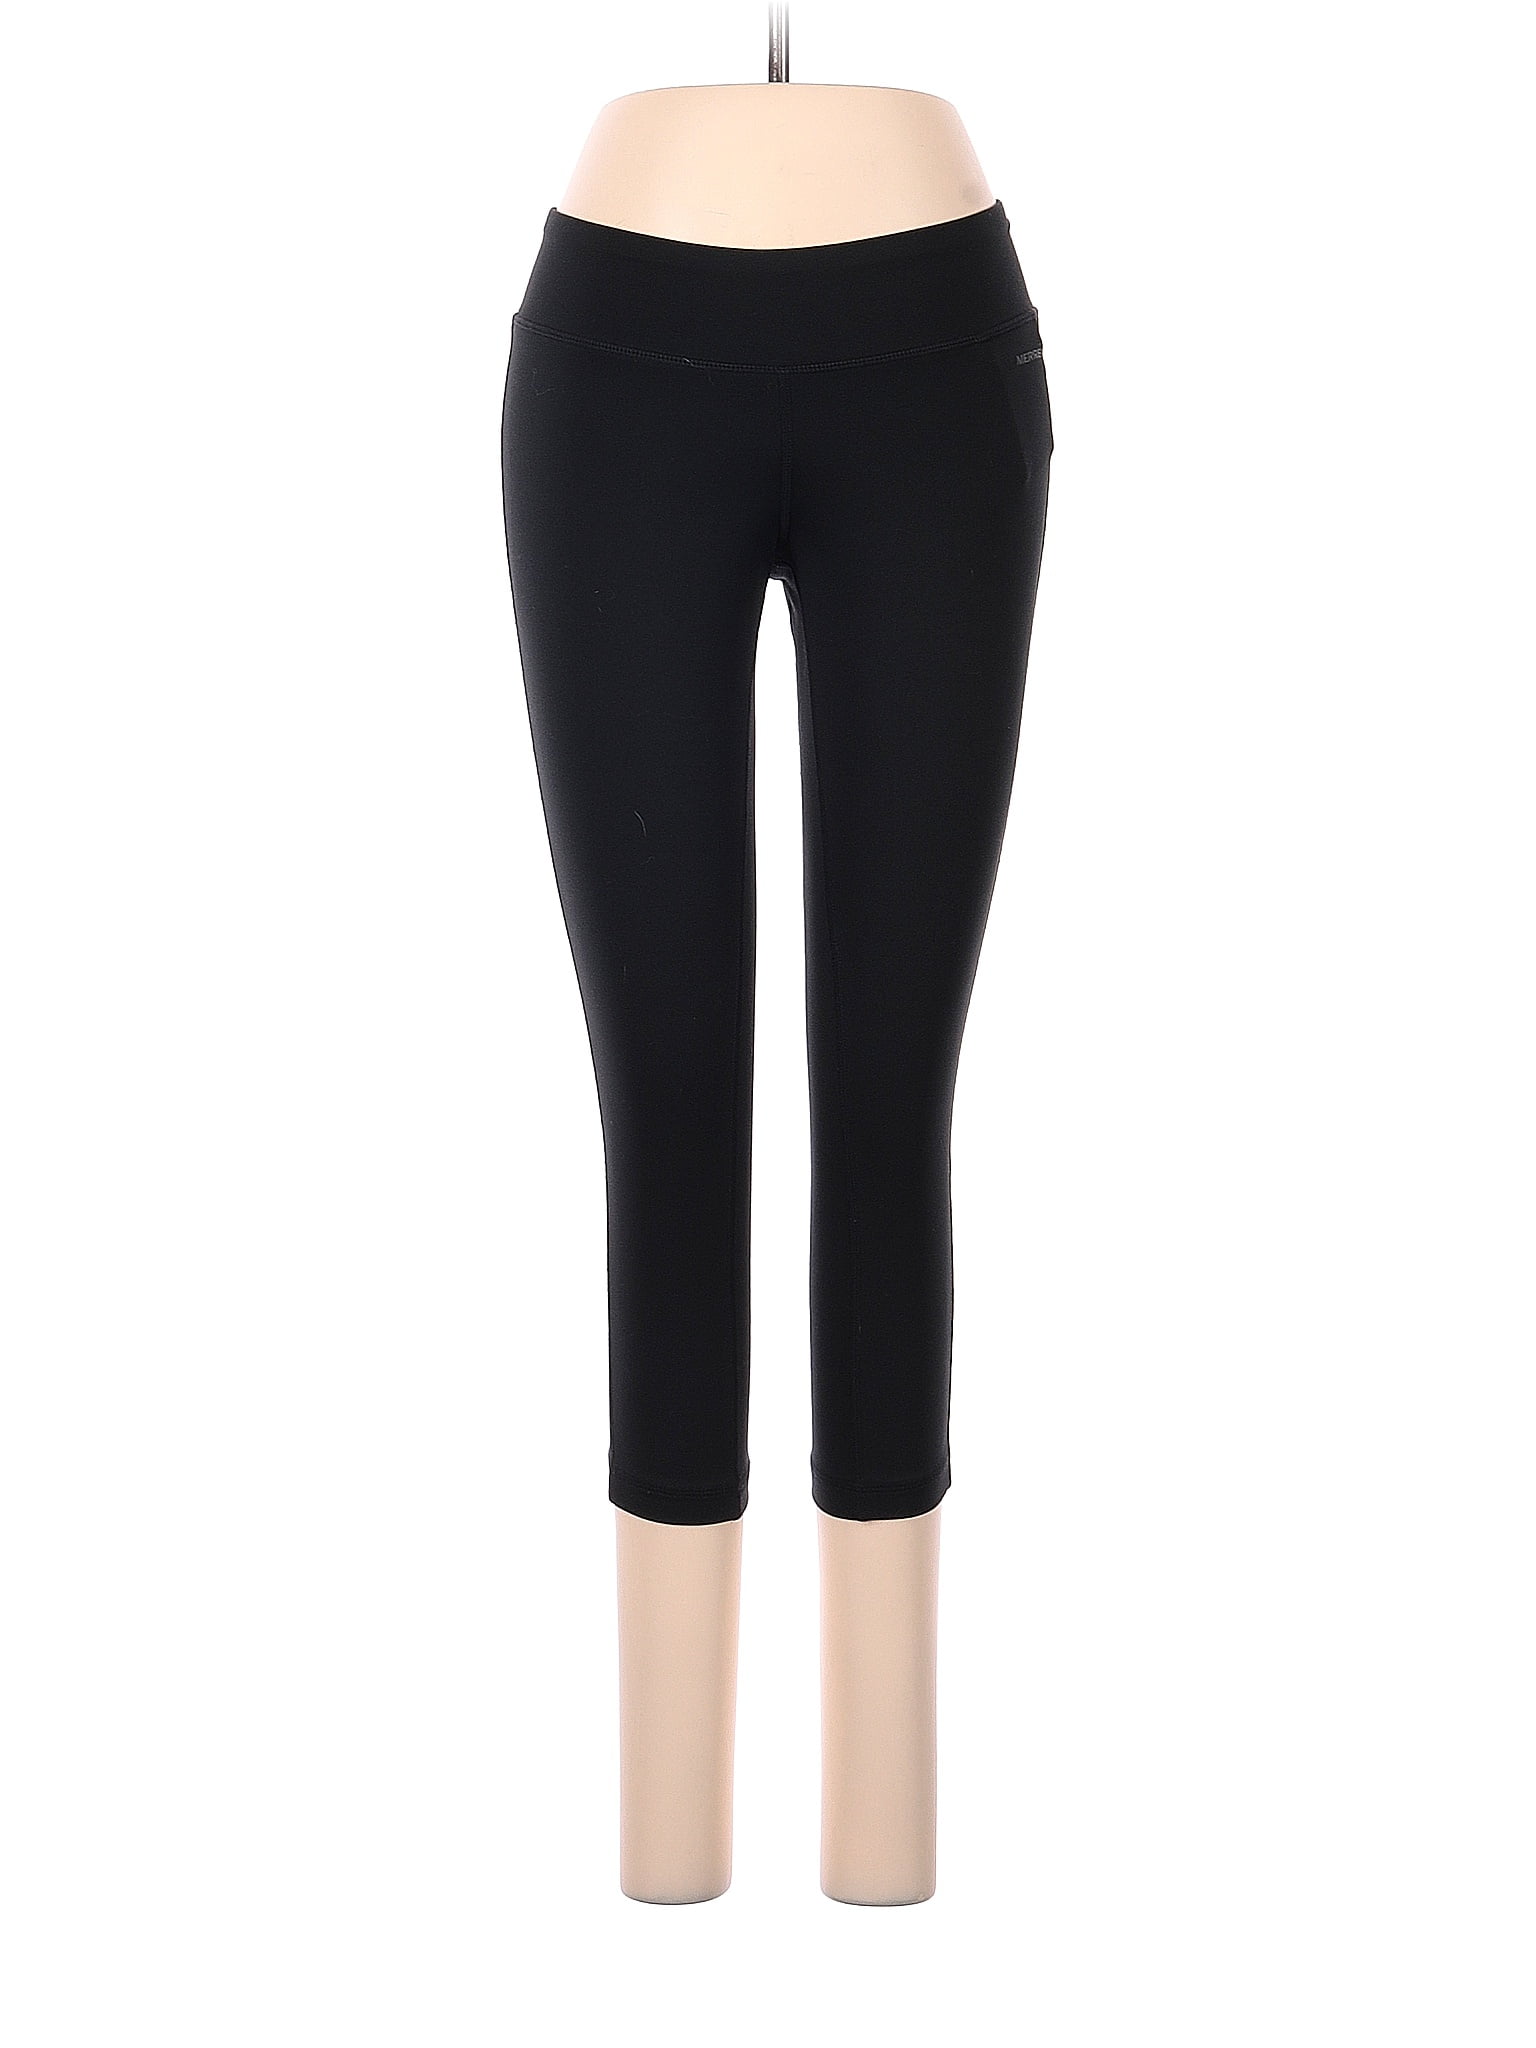 Pre-Owned Merrell Women's Size XS Active Pants - Walmart.com